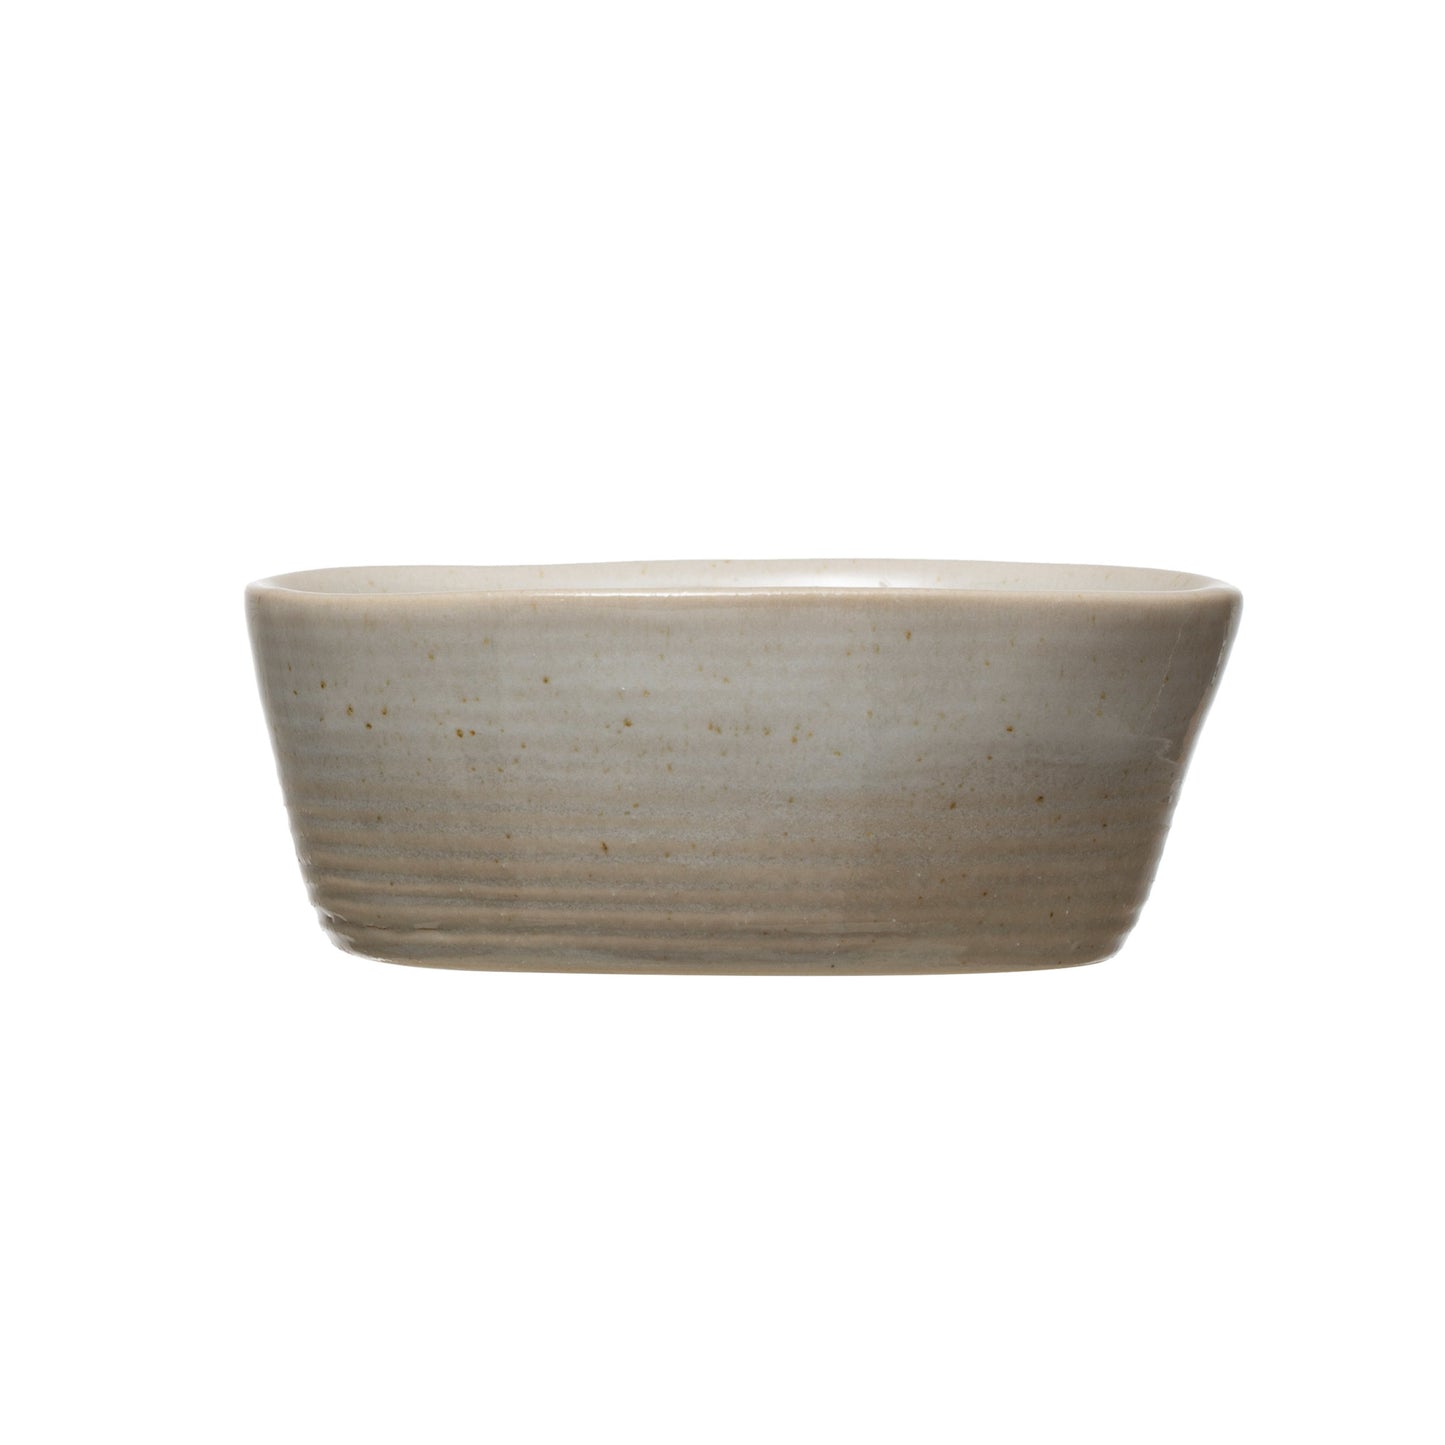 Oval Stoneware Bowl with Reactive Glaze